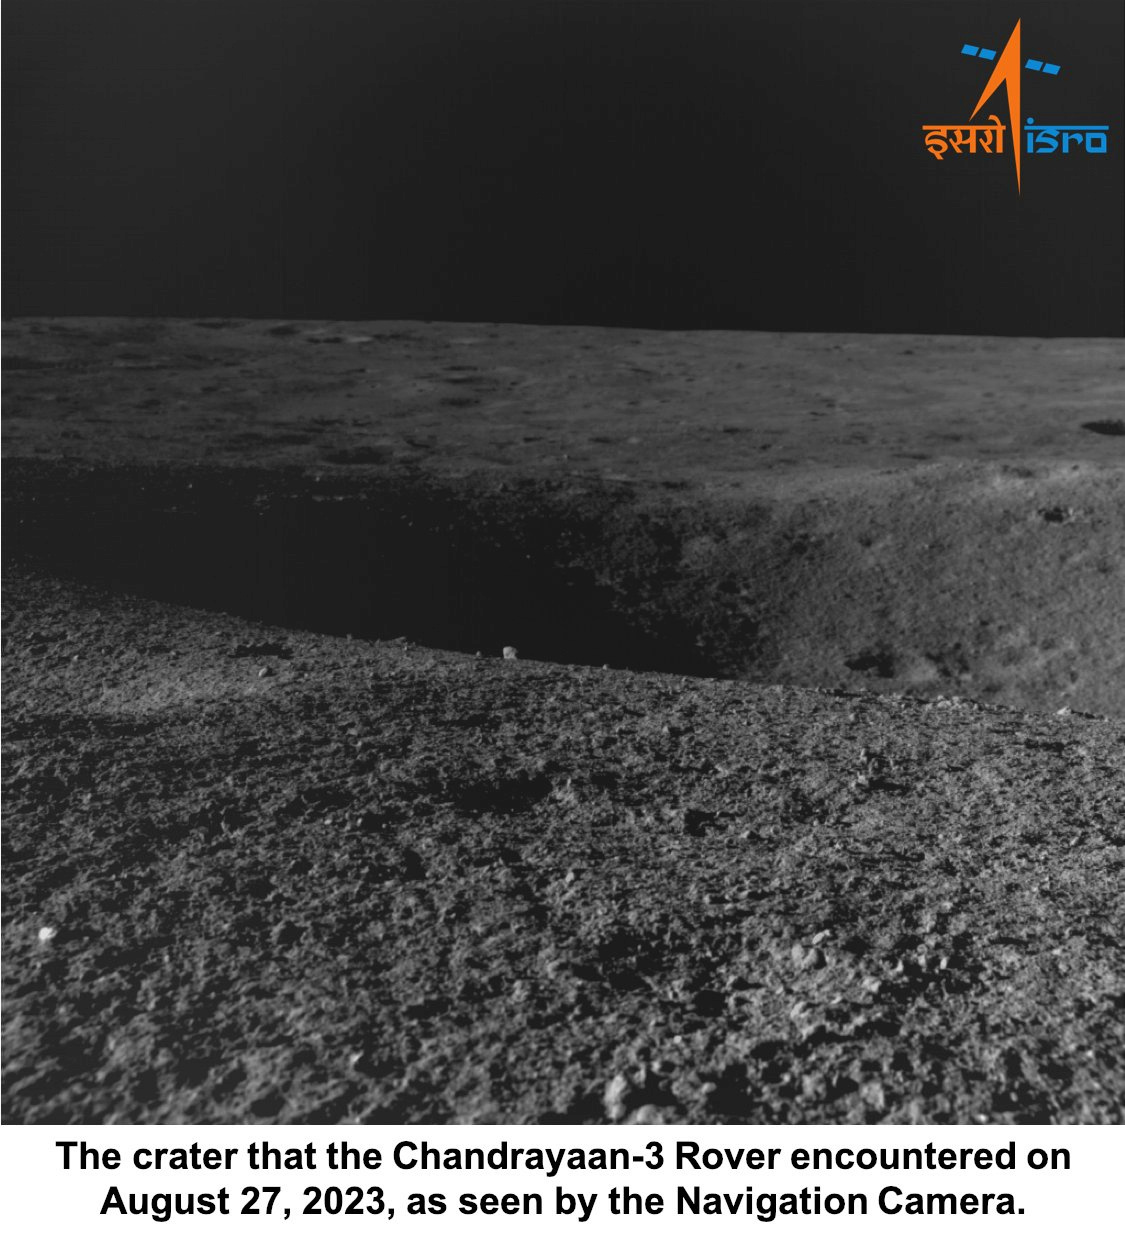 [Chandrayaan 3] Mission sur la Lune (atterrisseur Vikram - rover Pragyan) - Page 7 Image726